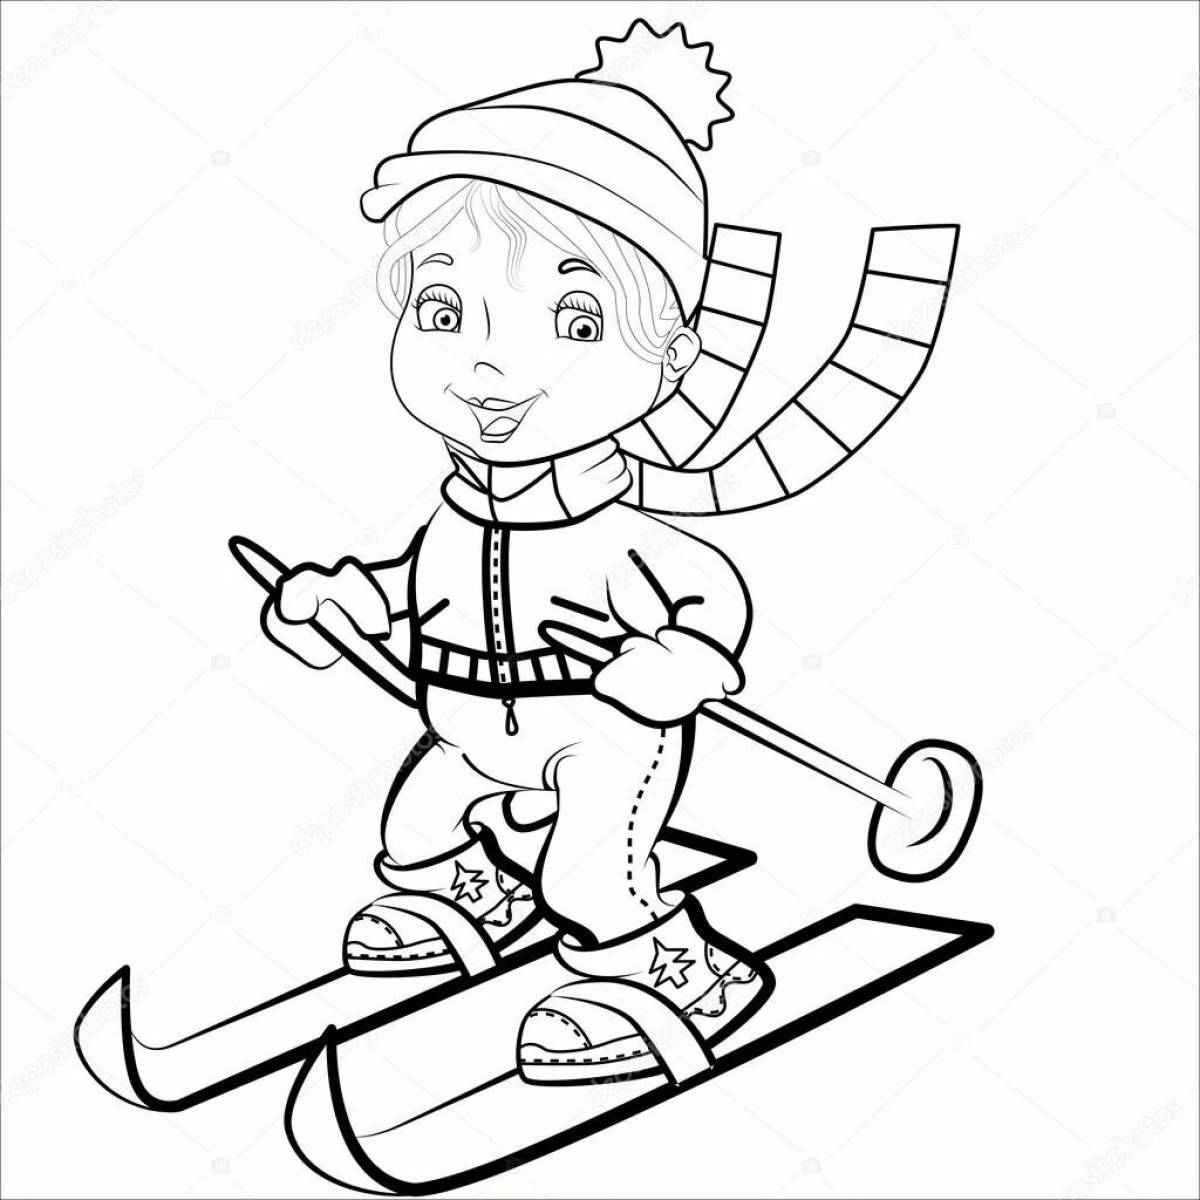 Skier for children 6 7 years old #6